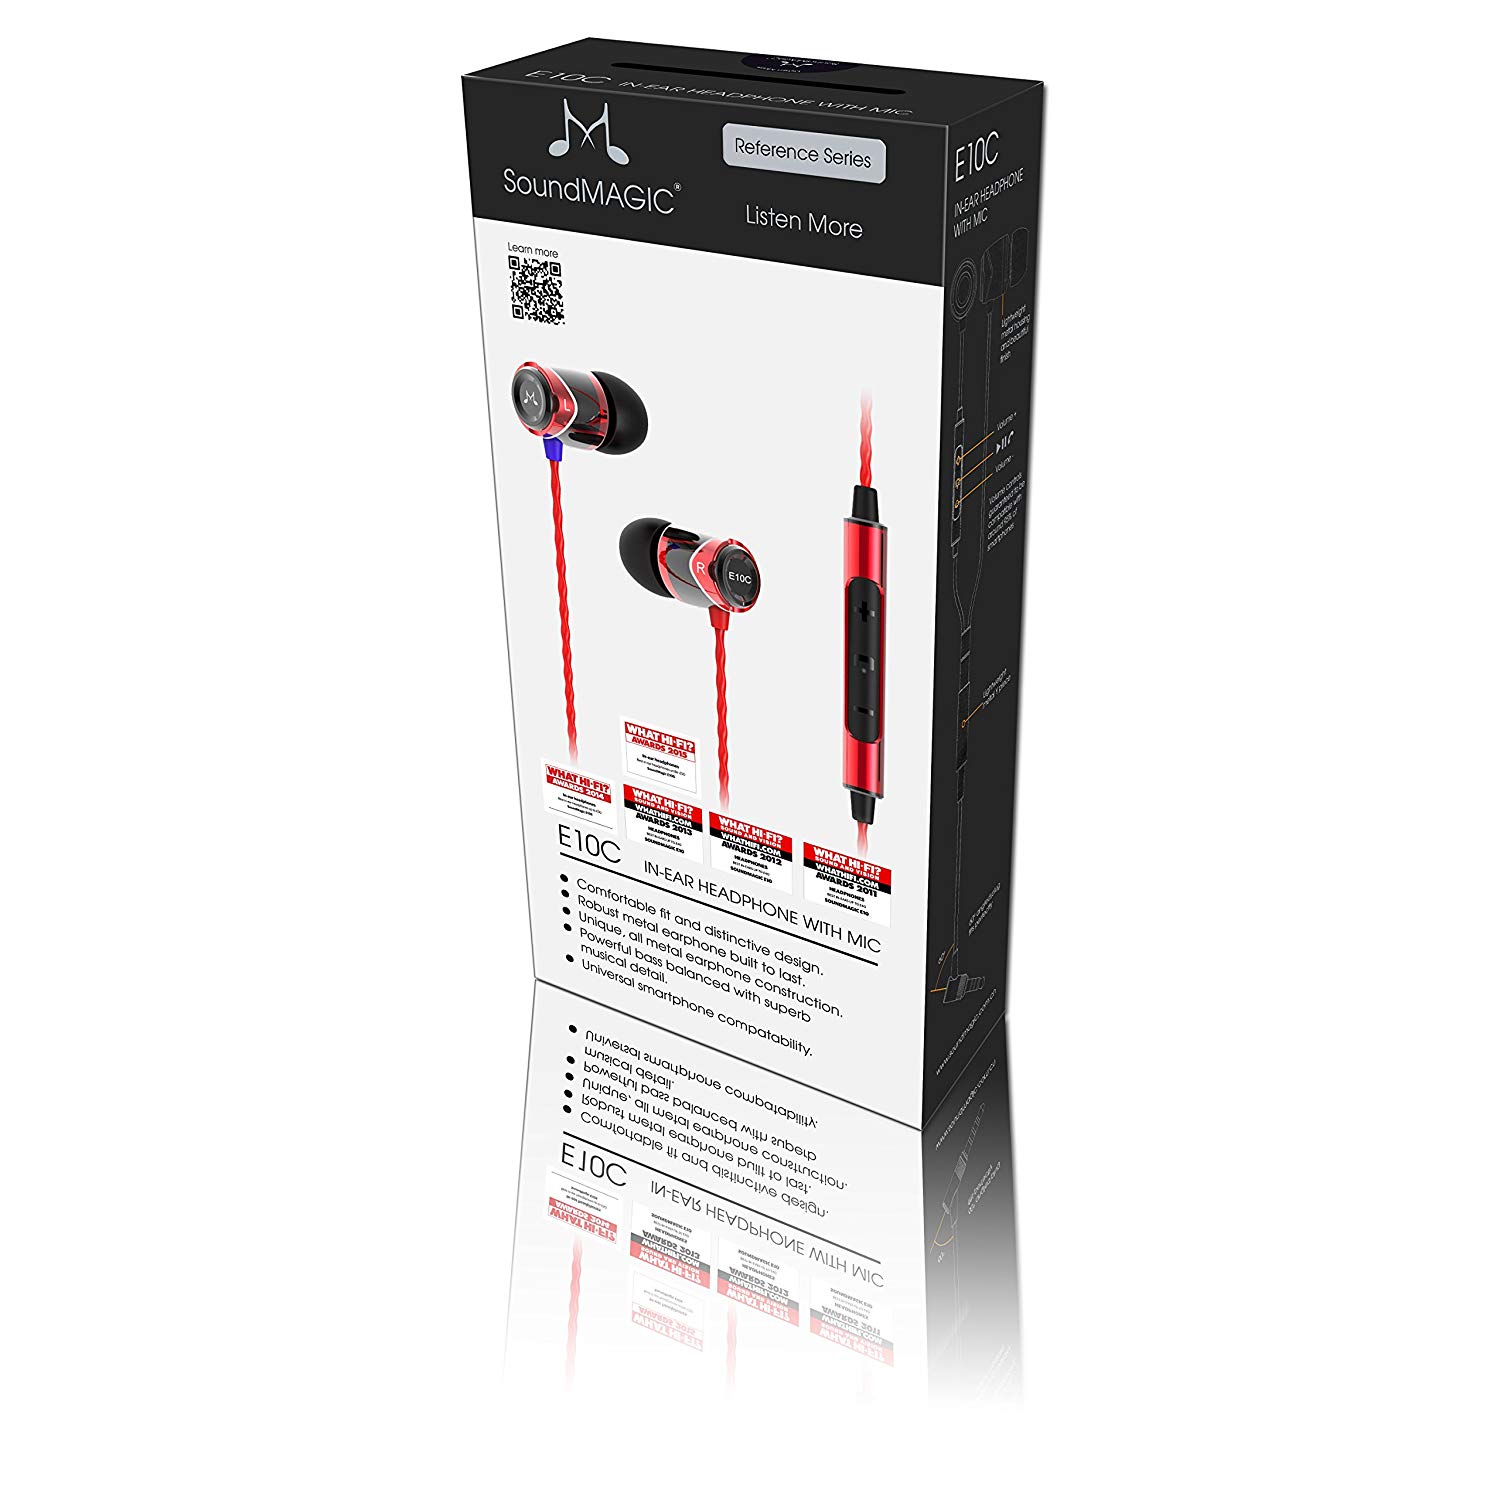 Soundmagic E10C หูฟัง In-Ear Noise Isolating with Microphone Hi-Fi Award มีไมค์ควบคุมเสียง สีแดง ของแท้ ประกันศูนย์ 1ปี (Red)